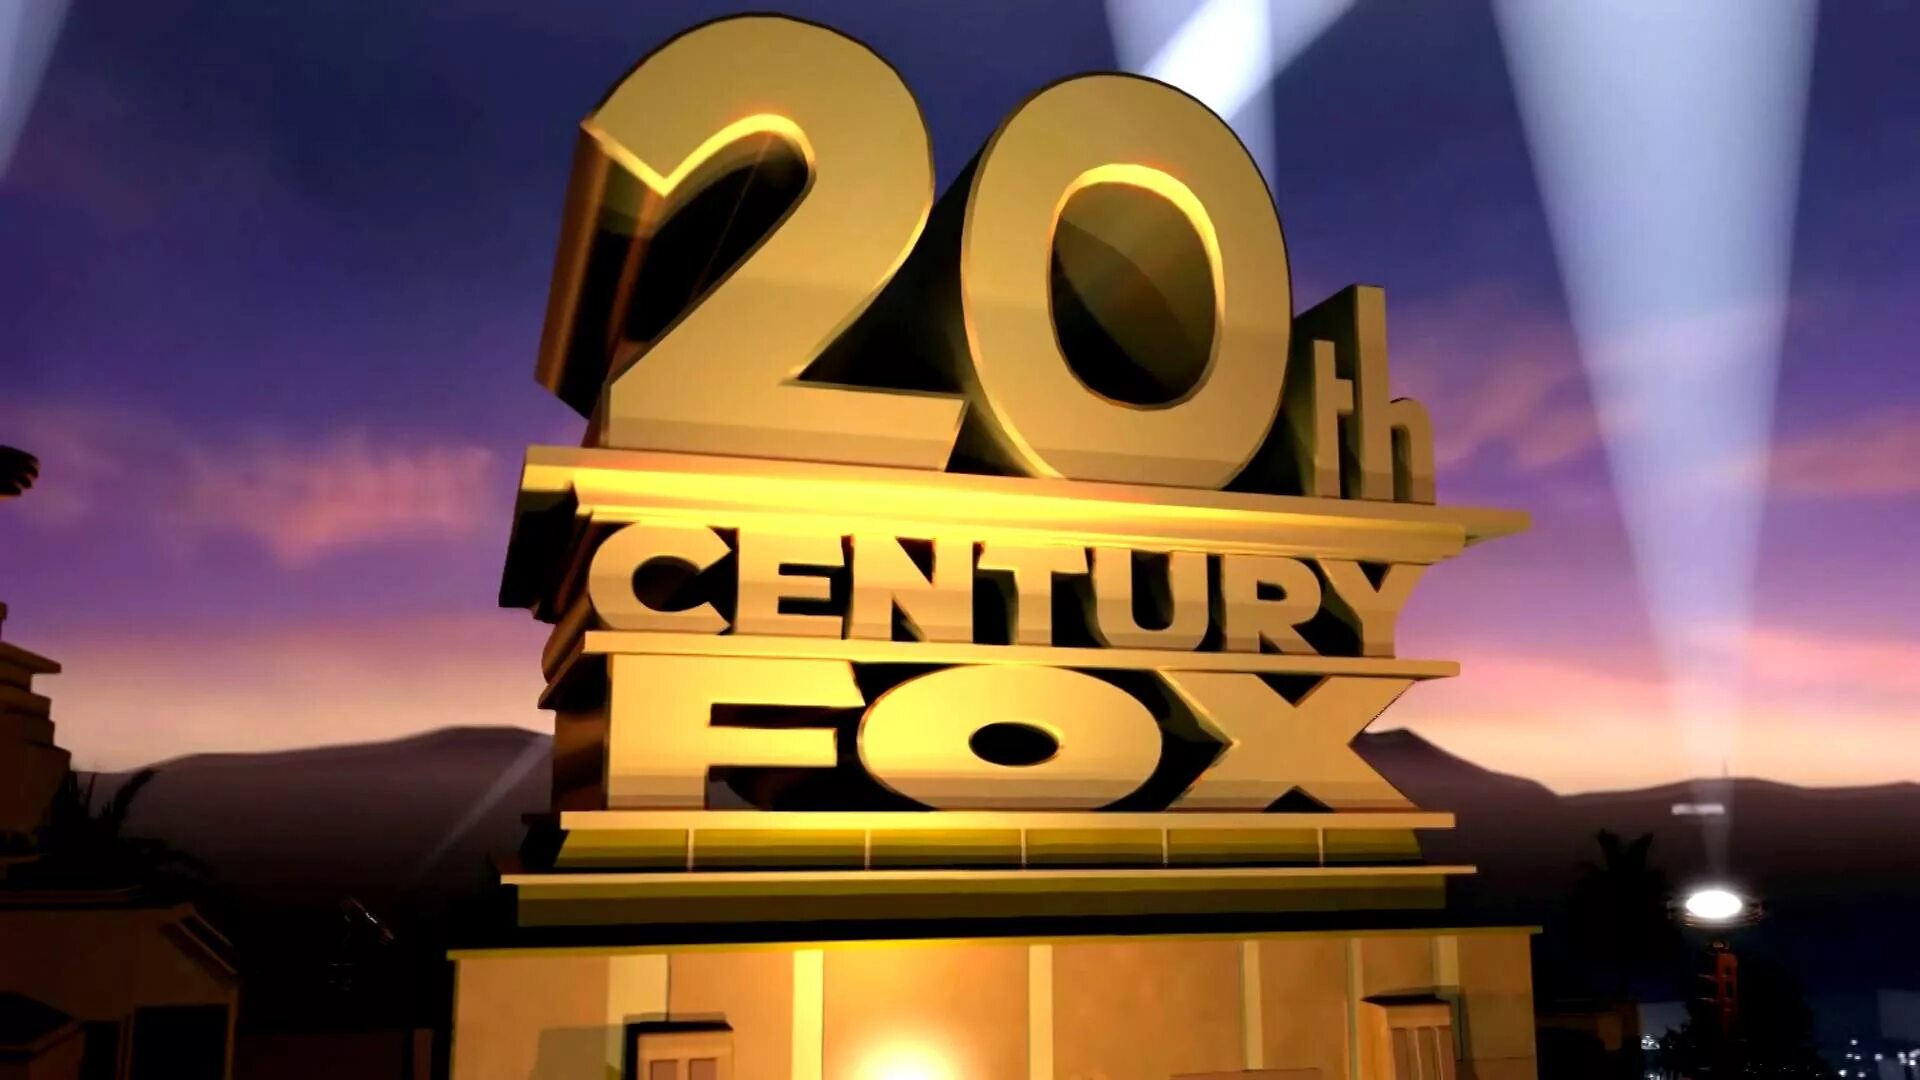 20 Век Центури Фокс. 20 Век Фокс хоум Энтертейнмент. 20th Century Fox 2010. 20th Century Fox фото. 20 th century